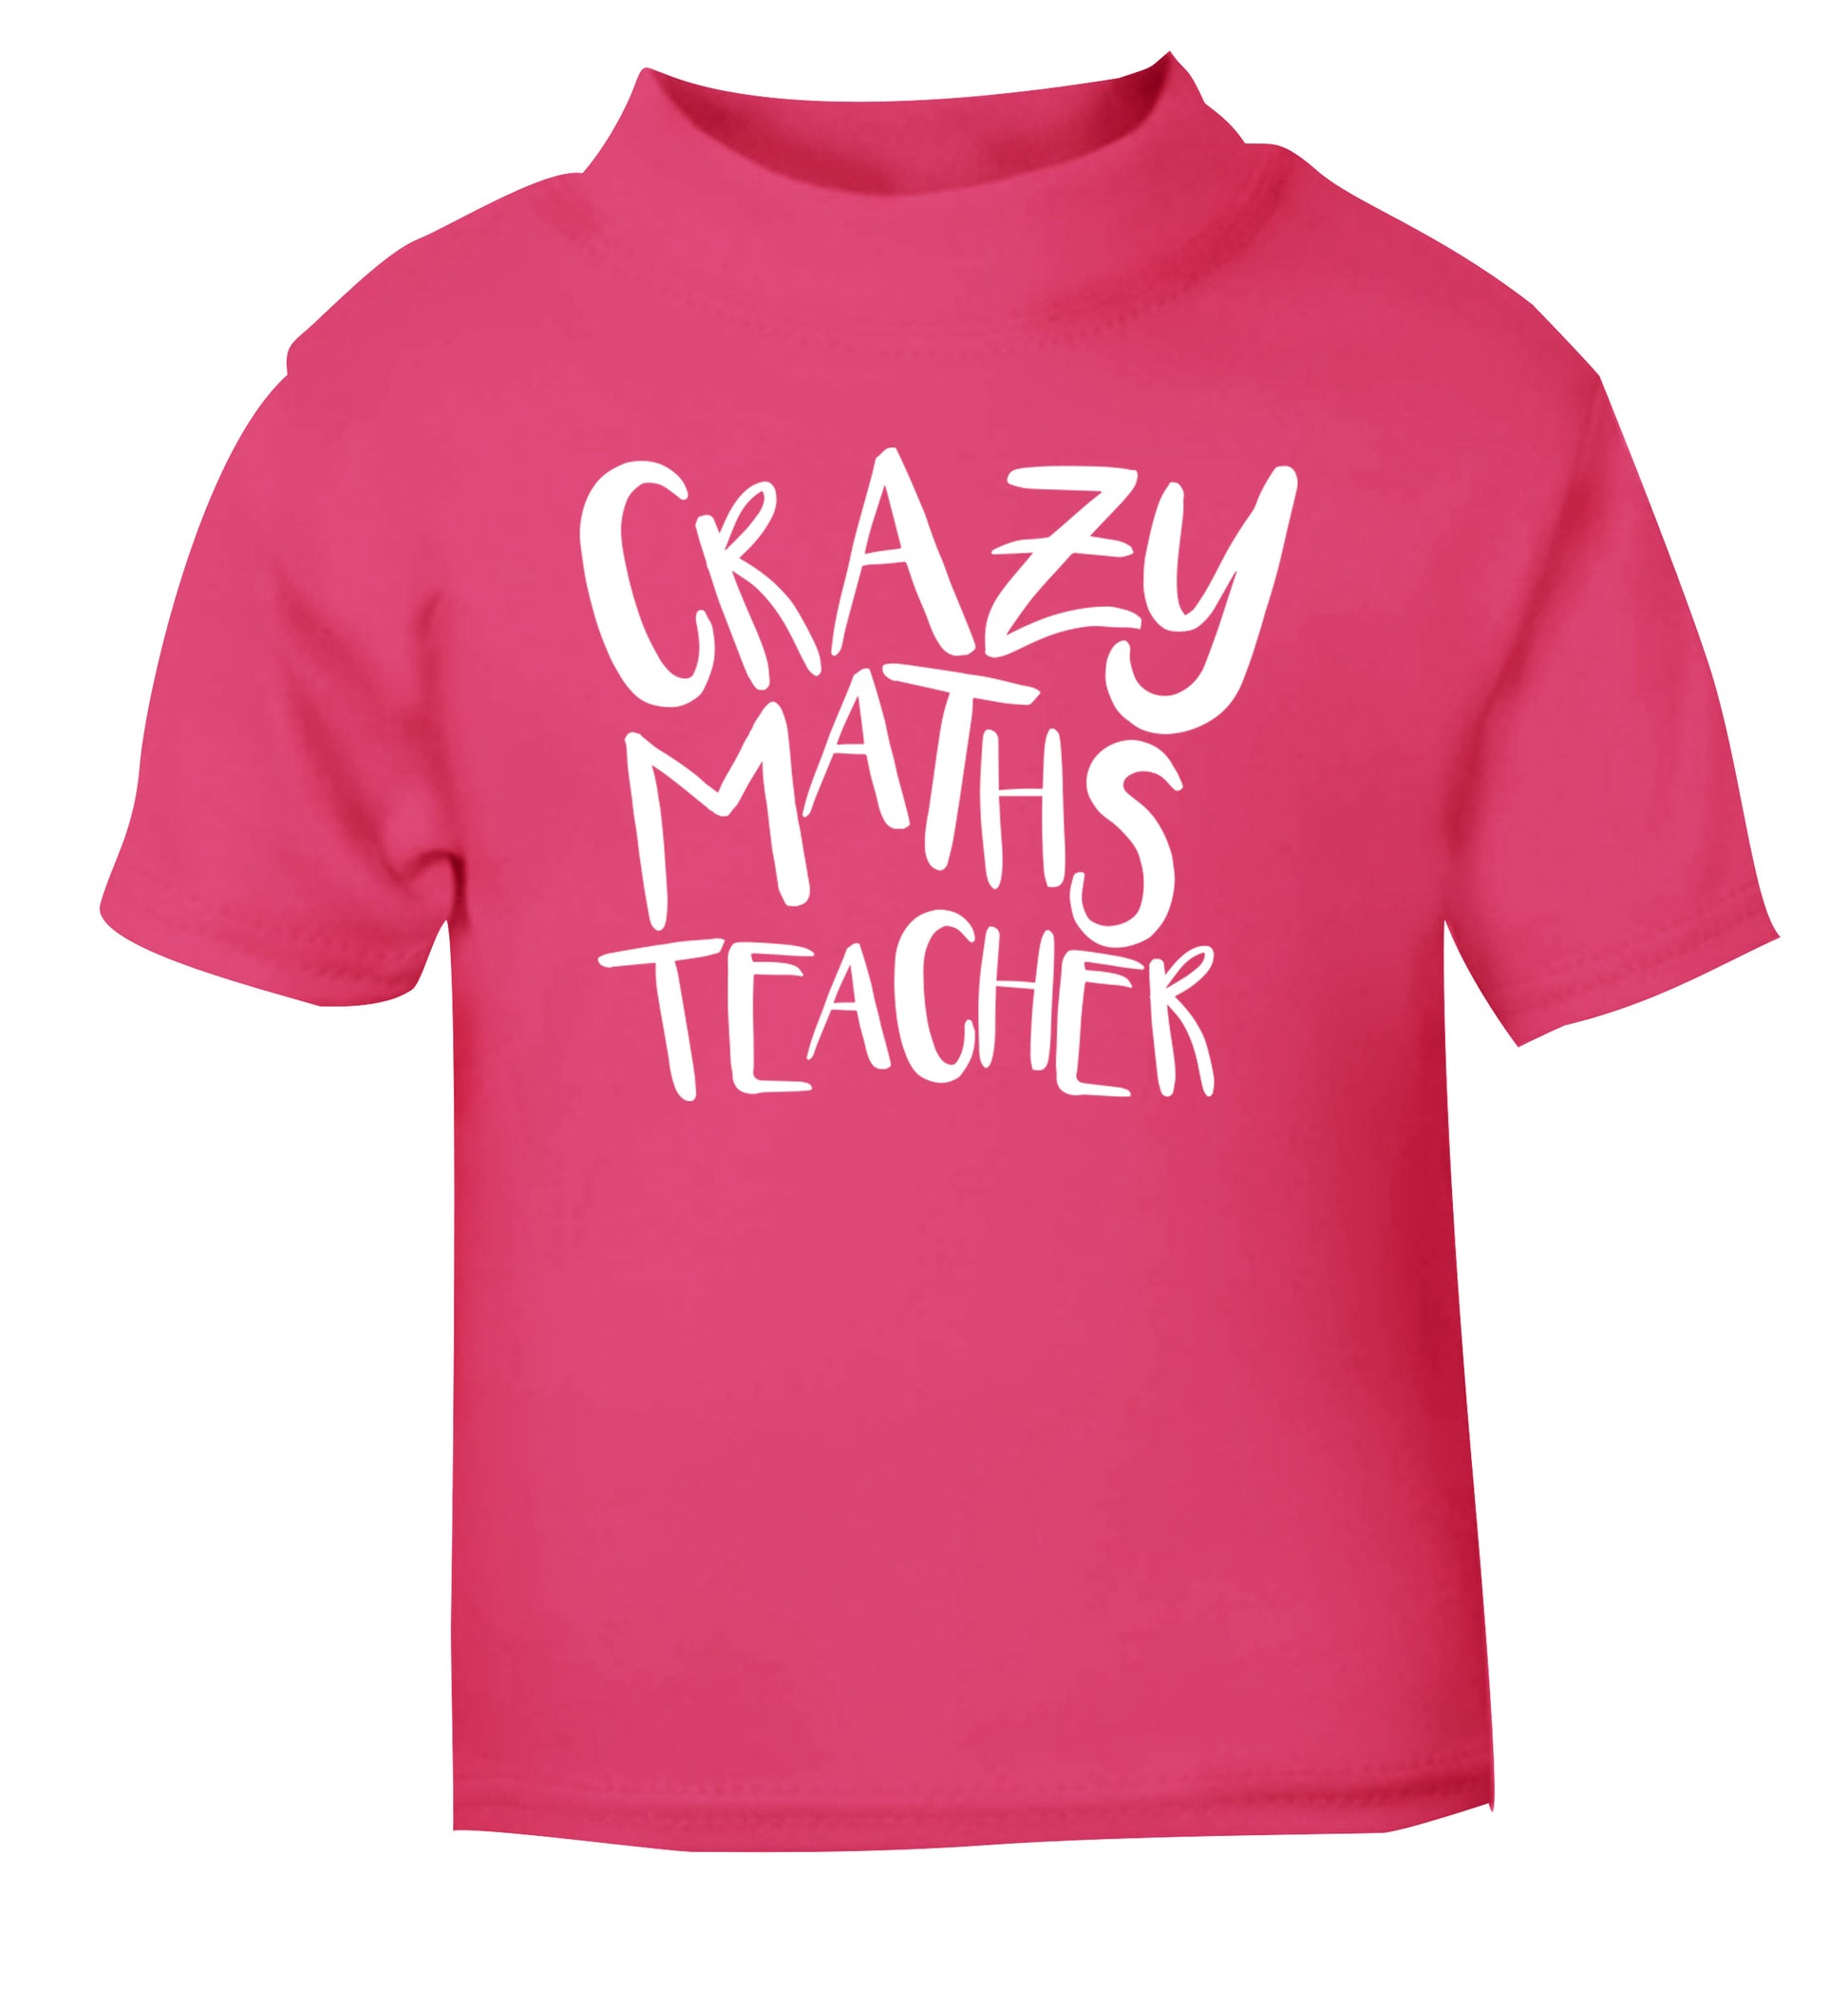 Crazy maths teacher pink Baby Toddler Tshirt 2 Years